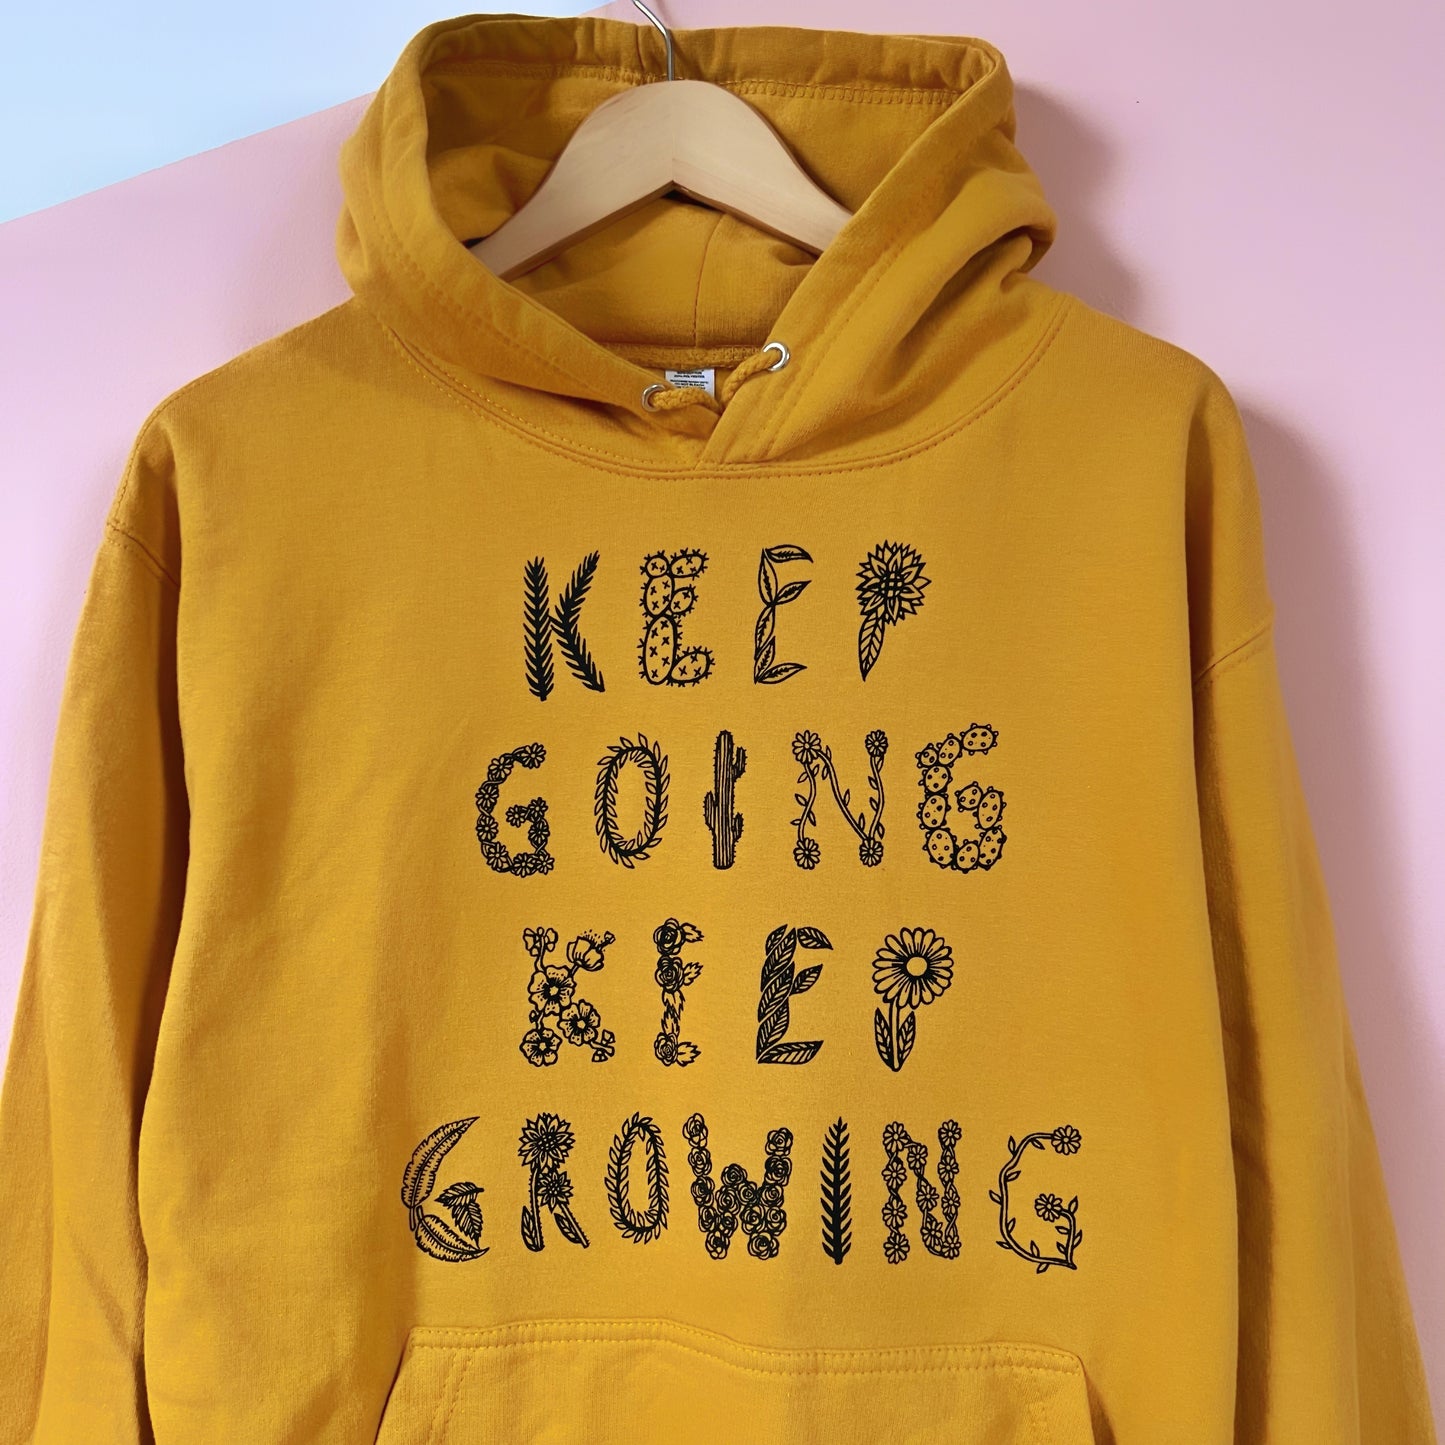 keep going, keep growing hoodie - mustard yellow